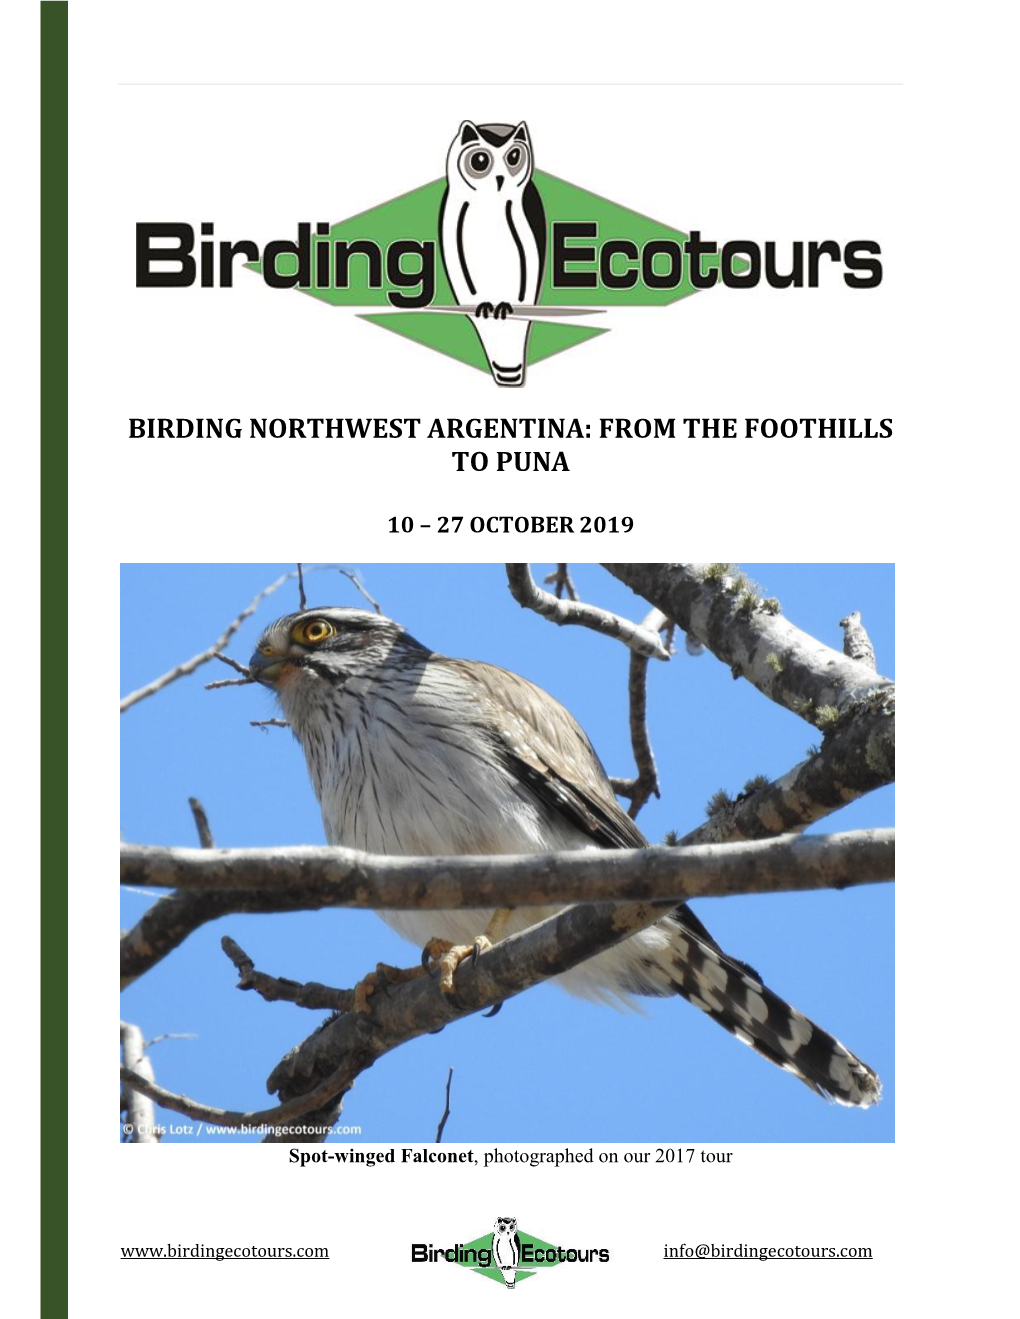 Birding Northwest Argentina: from the Foothills to Puna